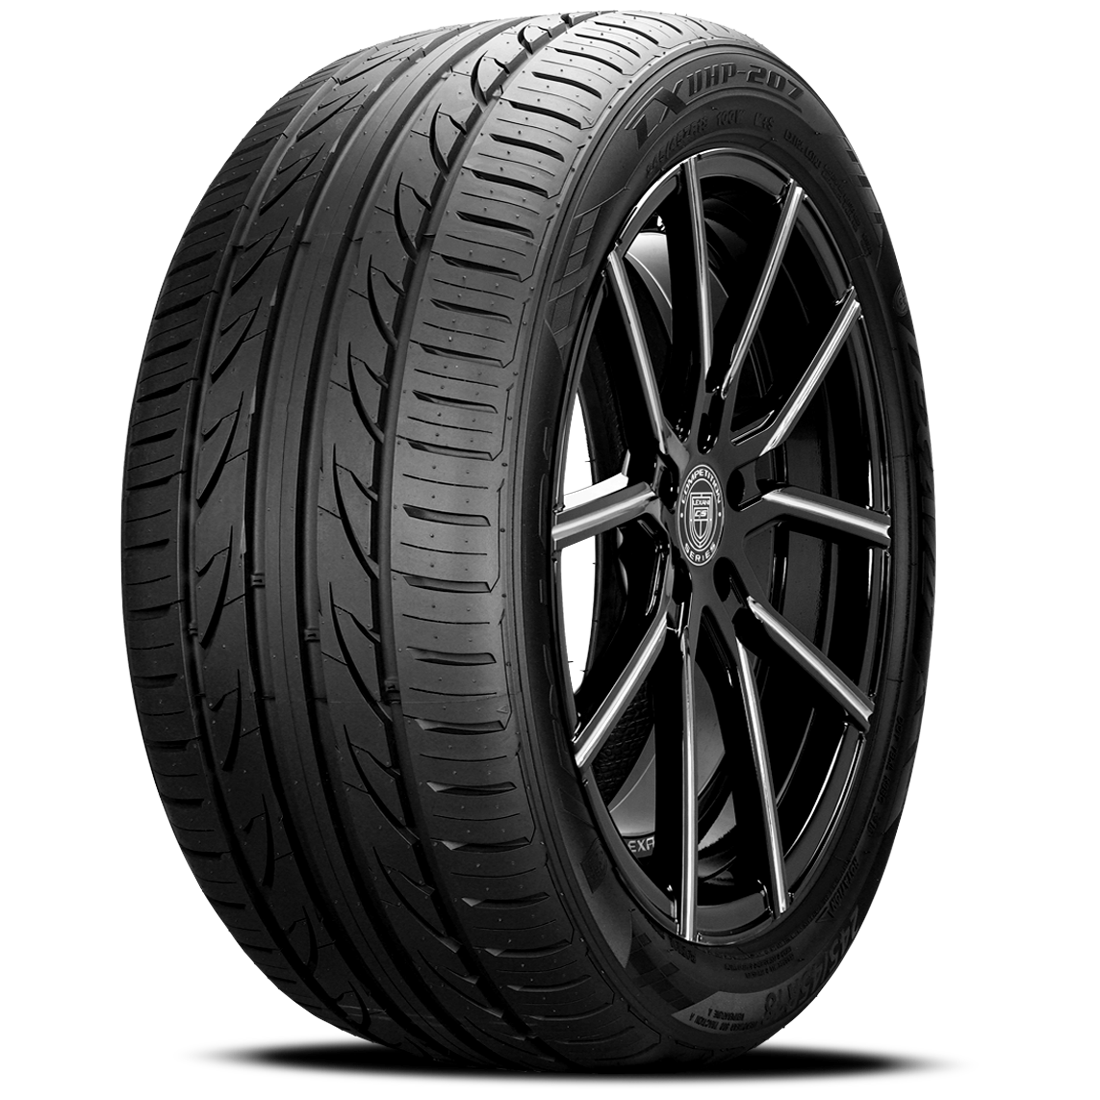 LEXANI LXUHP-207 215/45ZR18 (25.6X8.5R 18) Tires